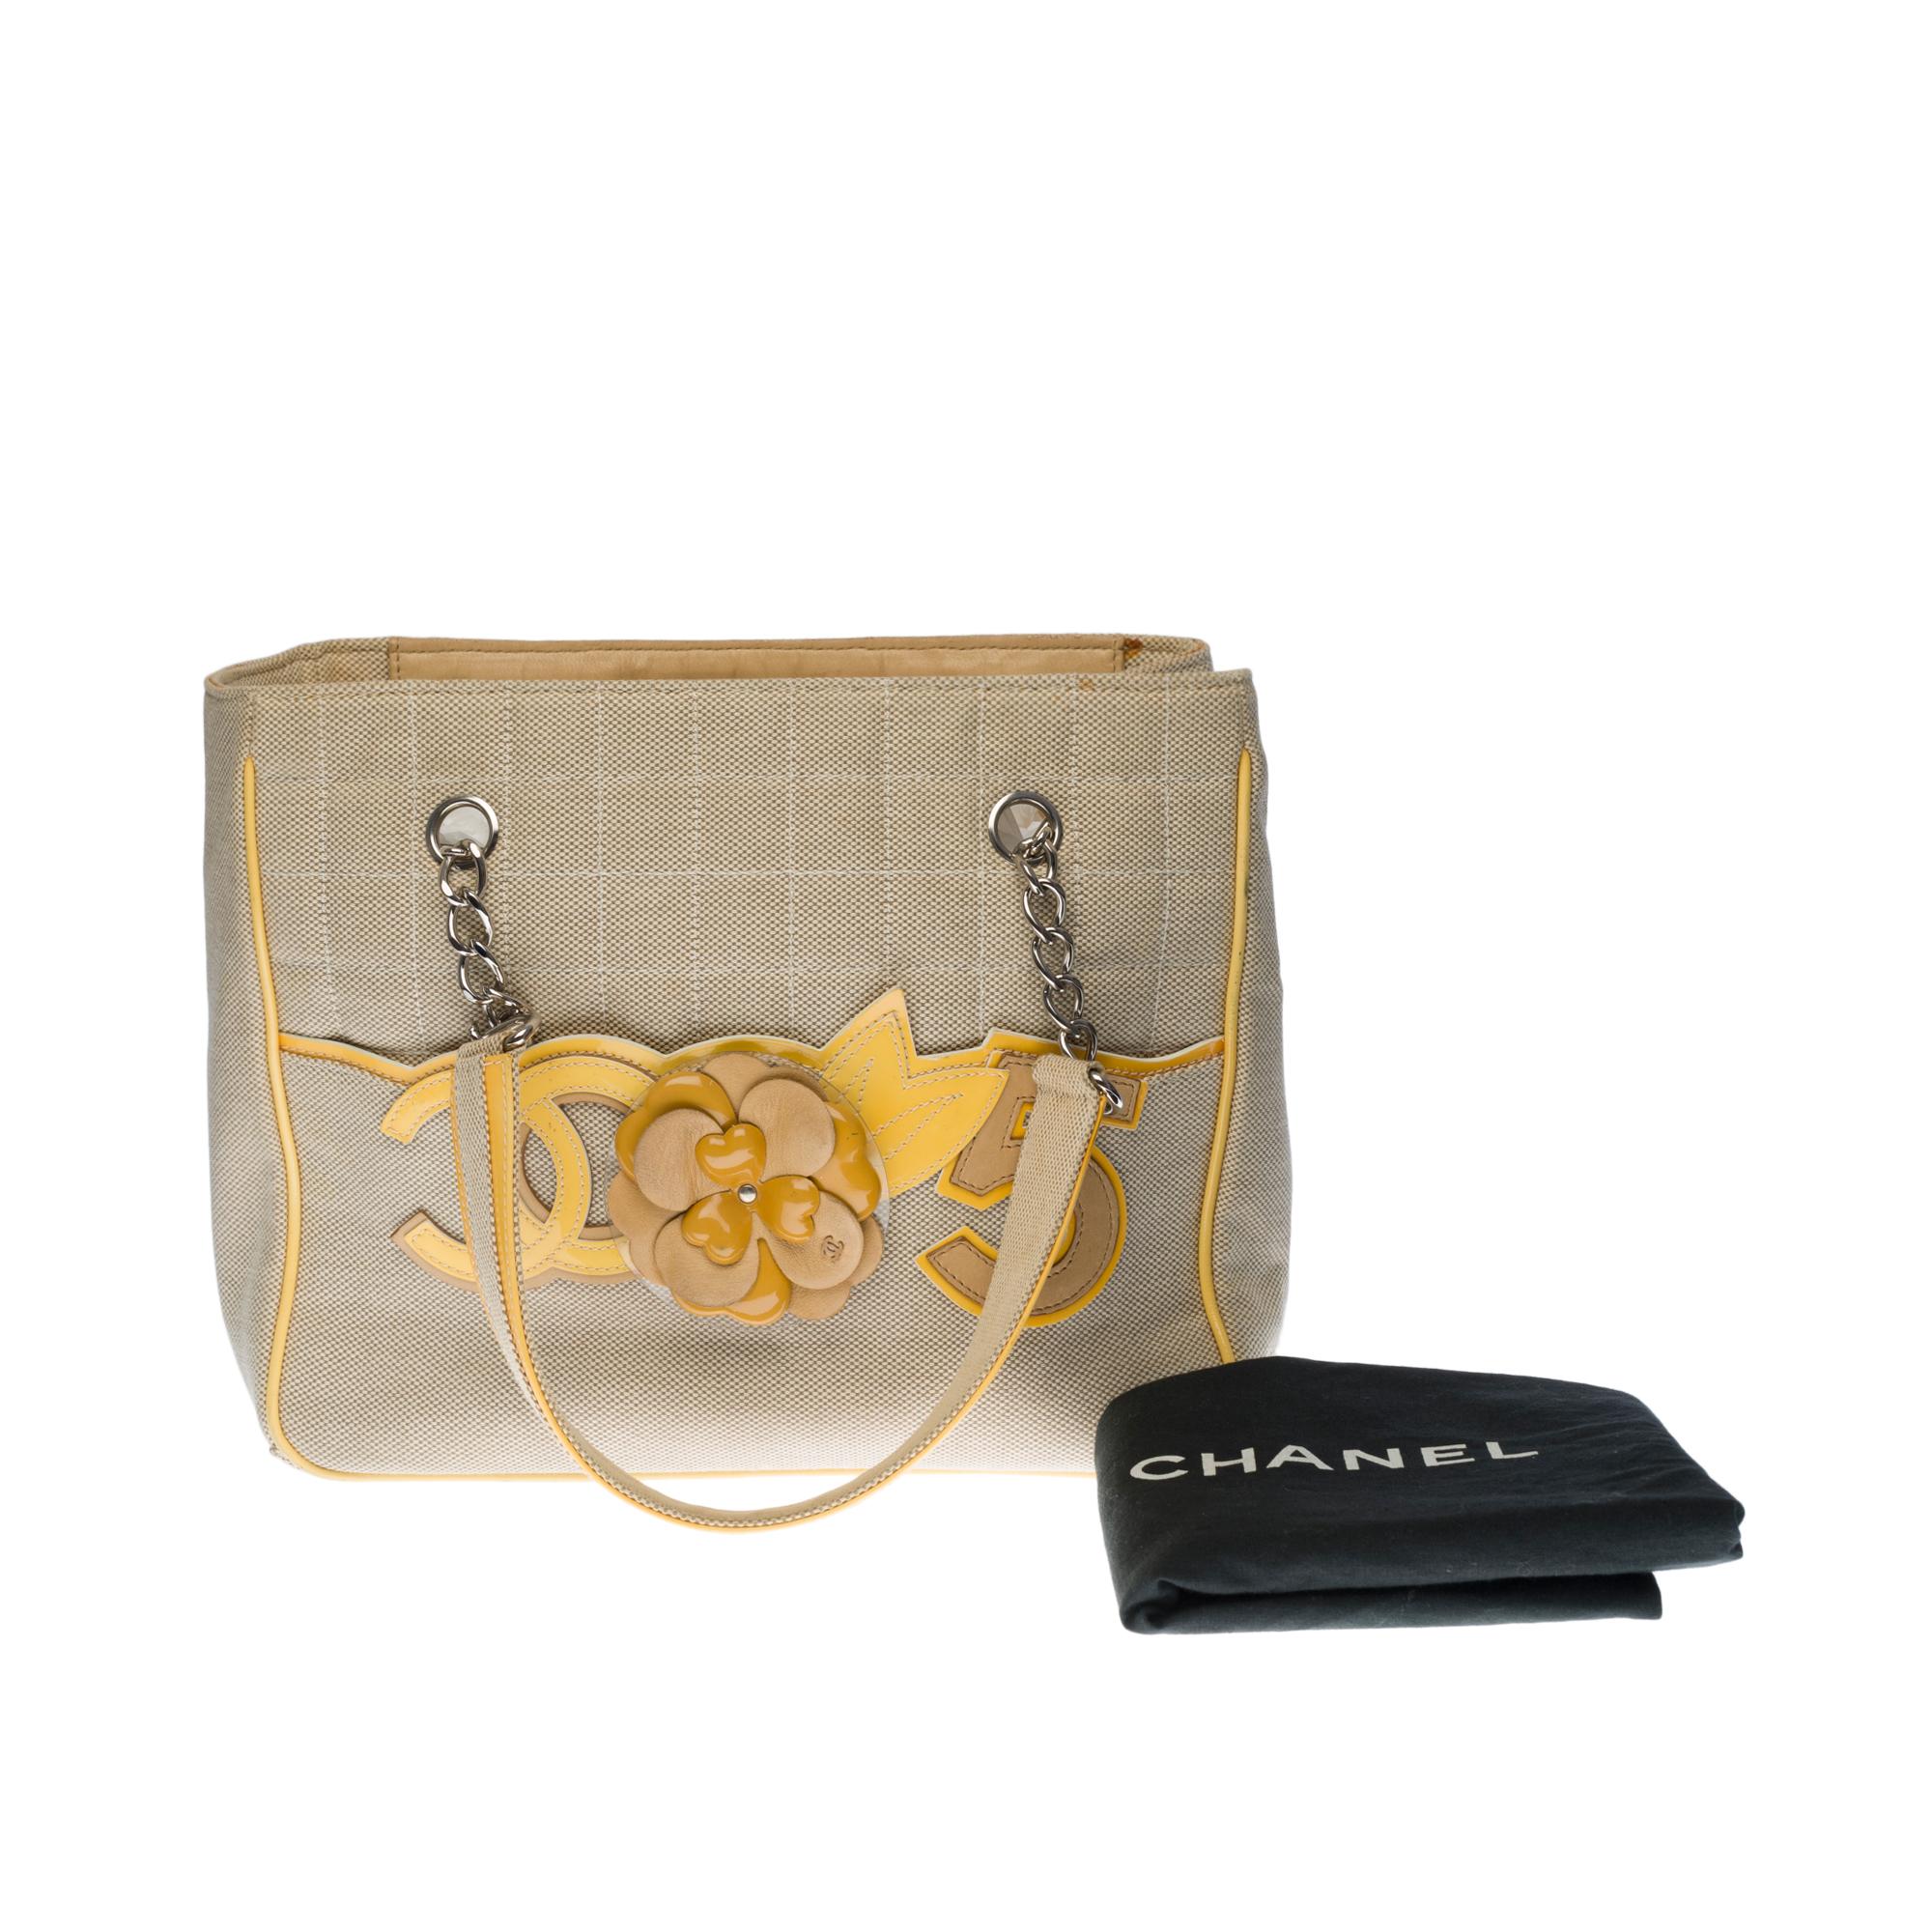 Chanel Camelia bag N°5 Tote bag in beige canvas, SHW 4